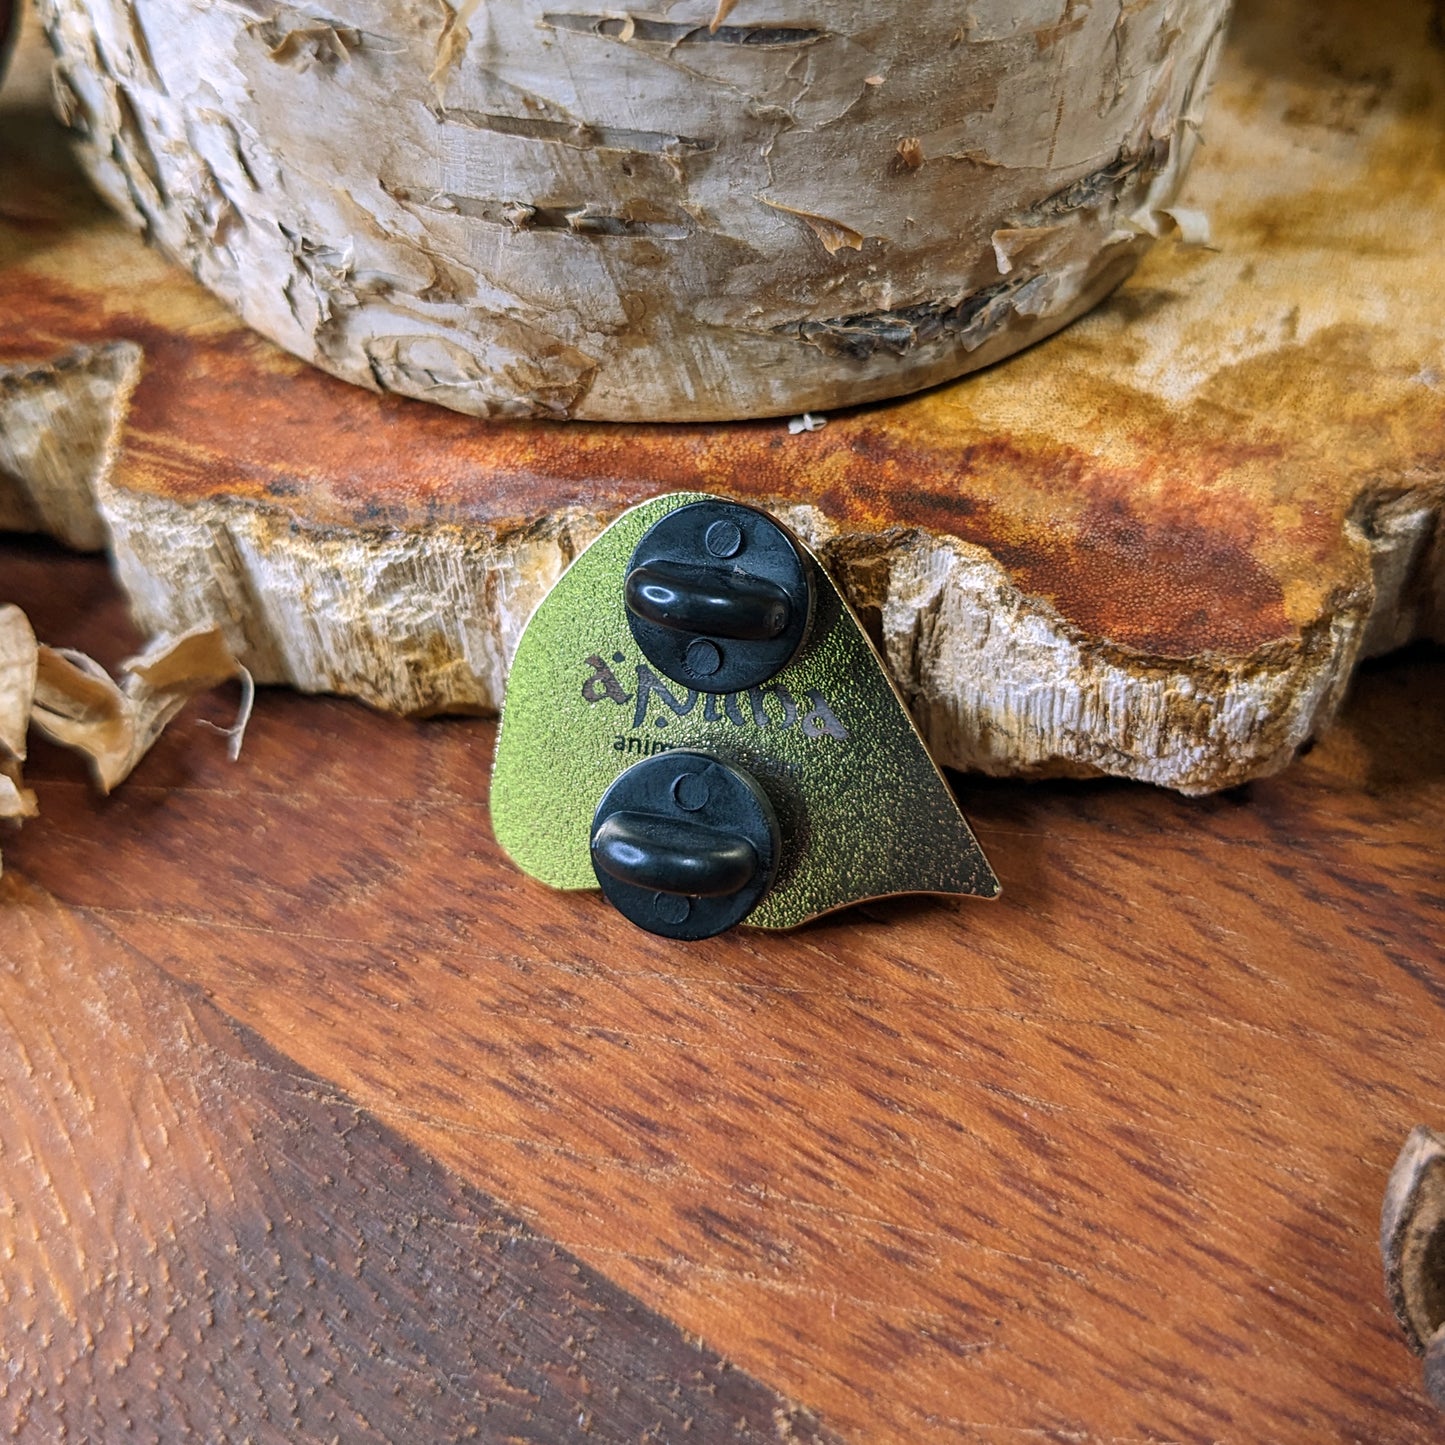 Postman's Hat Enamel Pin (The Legend Of Zelda: Majora's Mask)